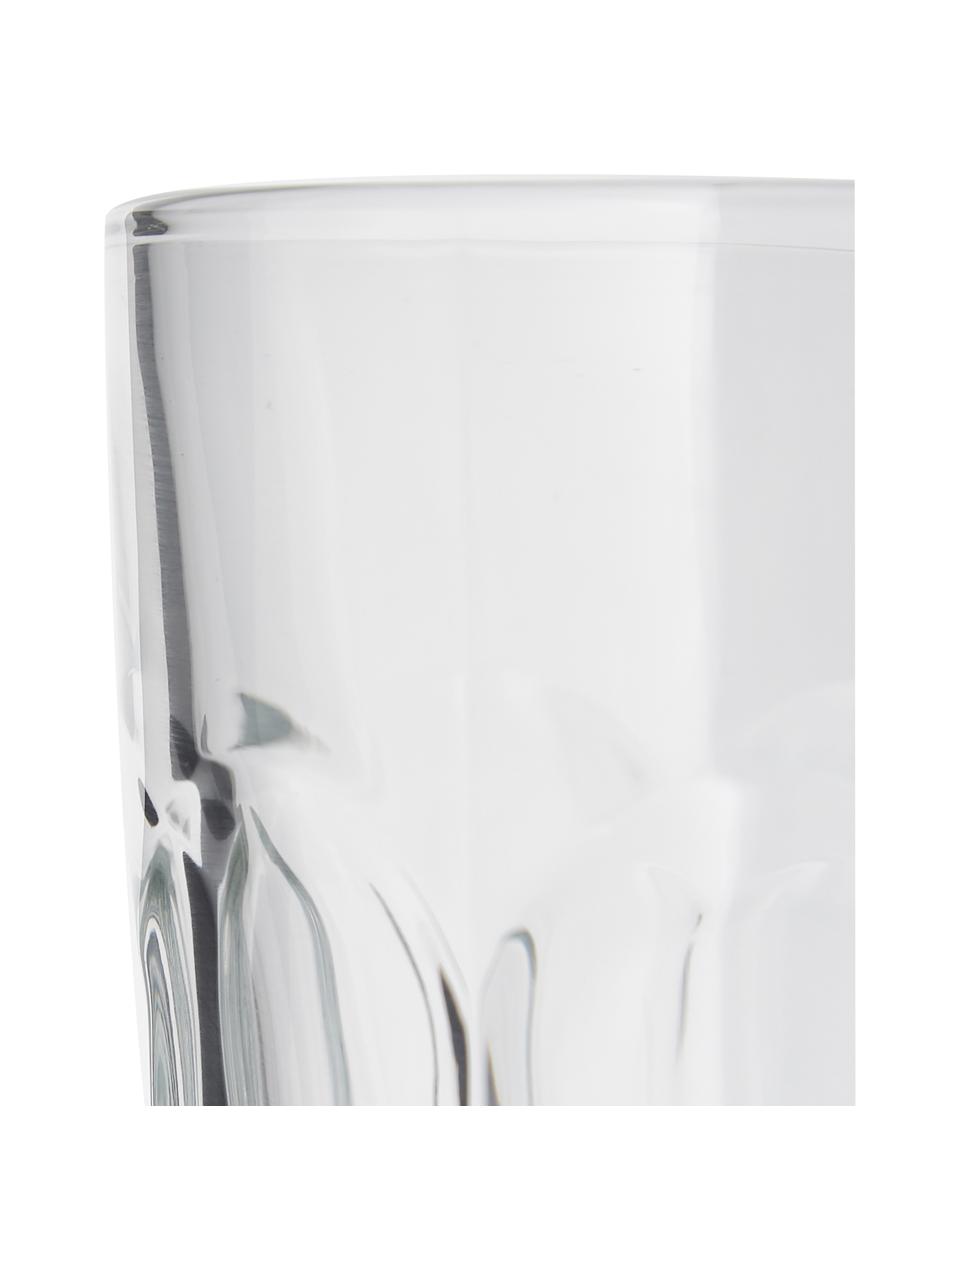 Glazen Lousanne met reliëf in landelijke stijl, 6 stuks, Glas, Transparant, Ø 9 x H 17 cm, 310 ml